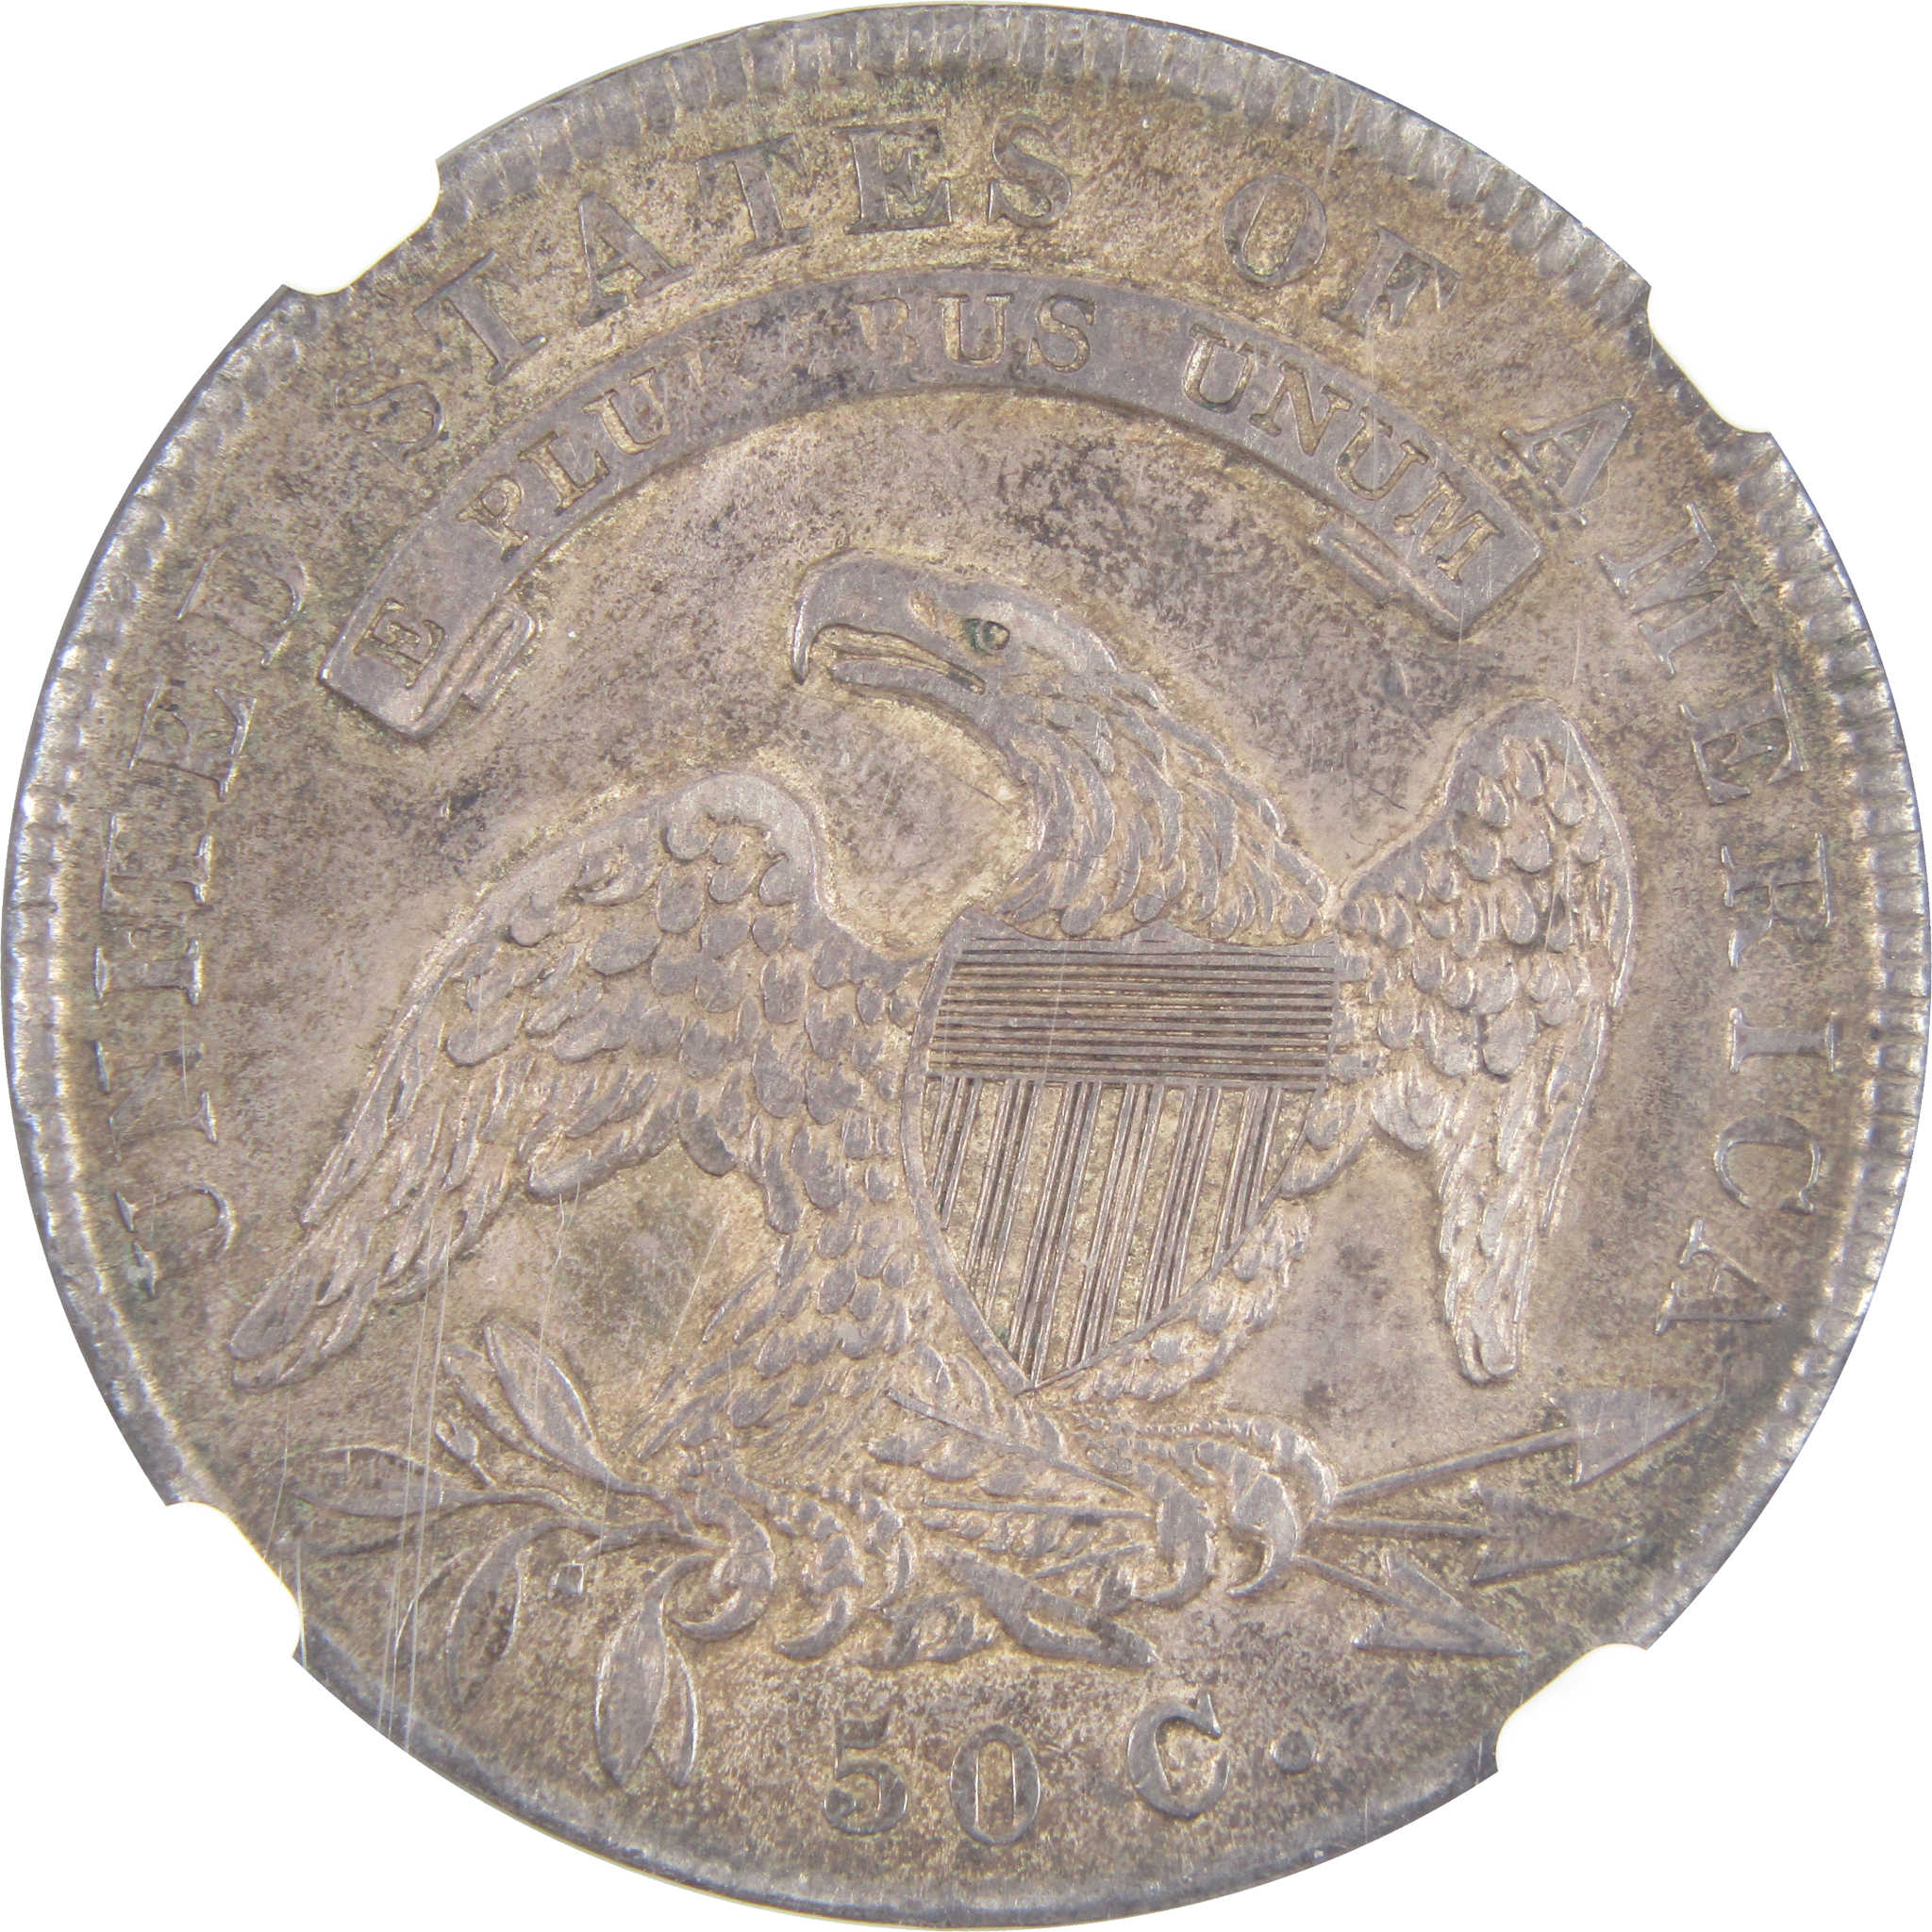 1836 O-114 Capped Bust Half Dollar AU Details NGC Silver 50c SKU:I2654